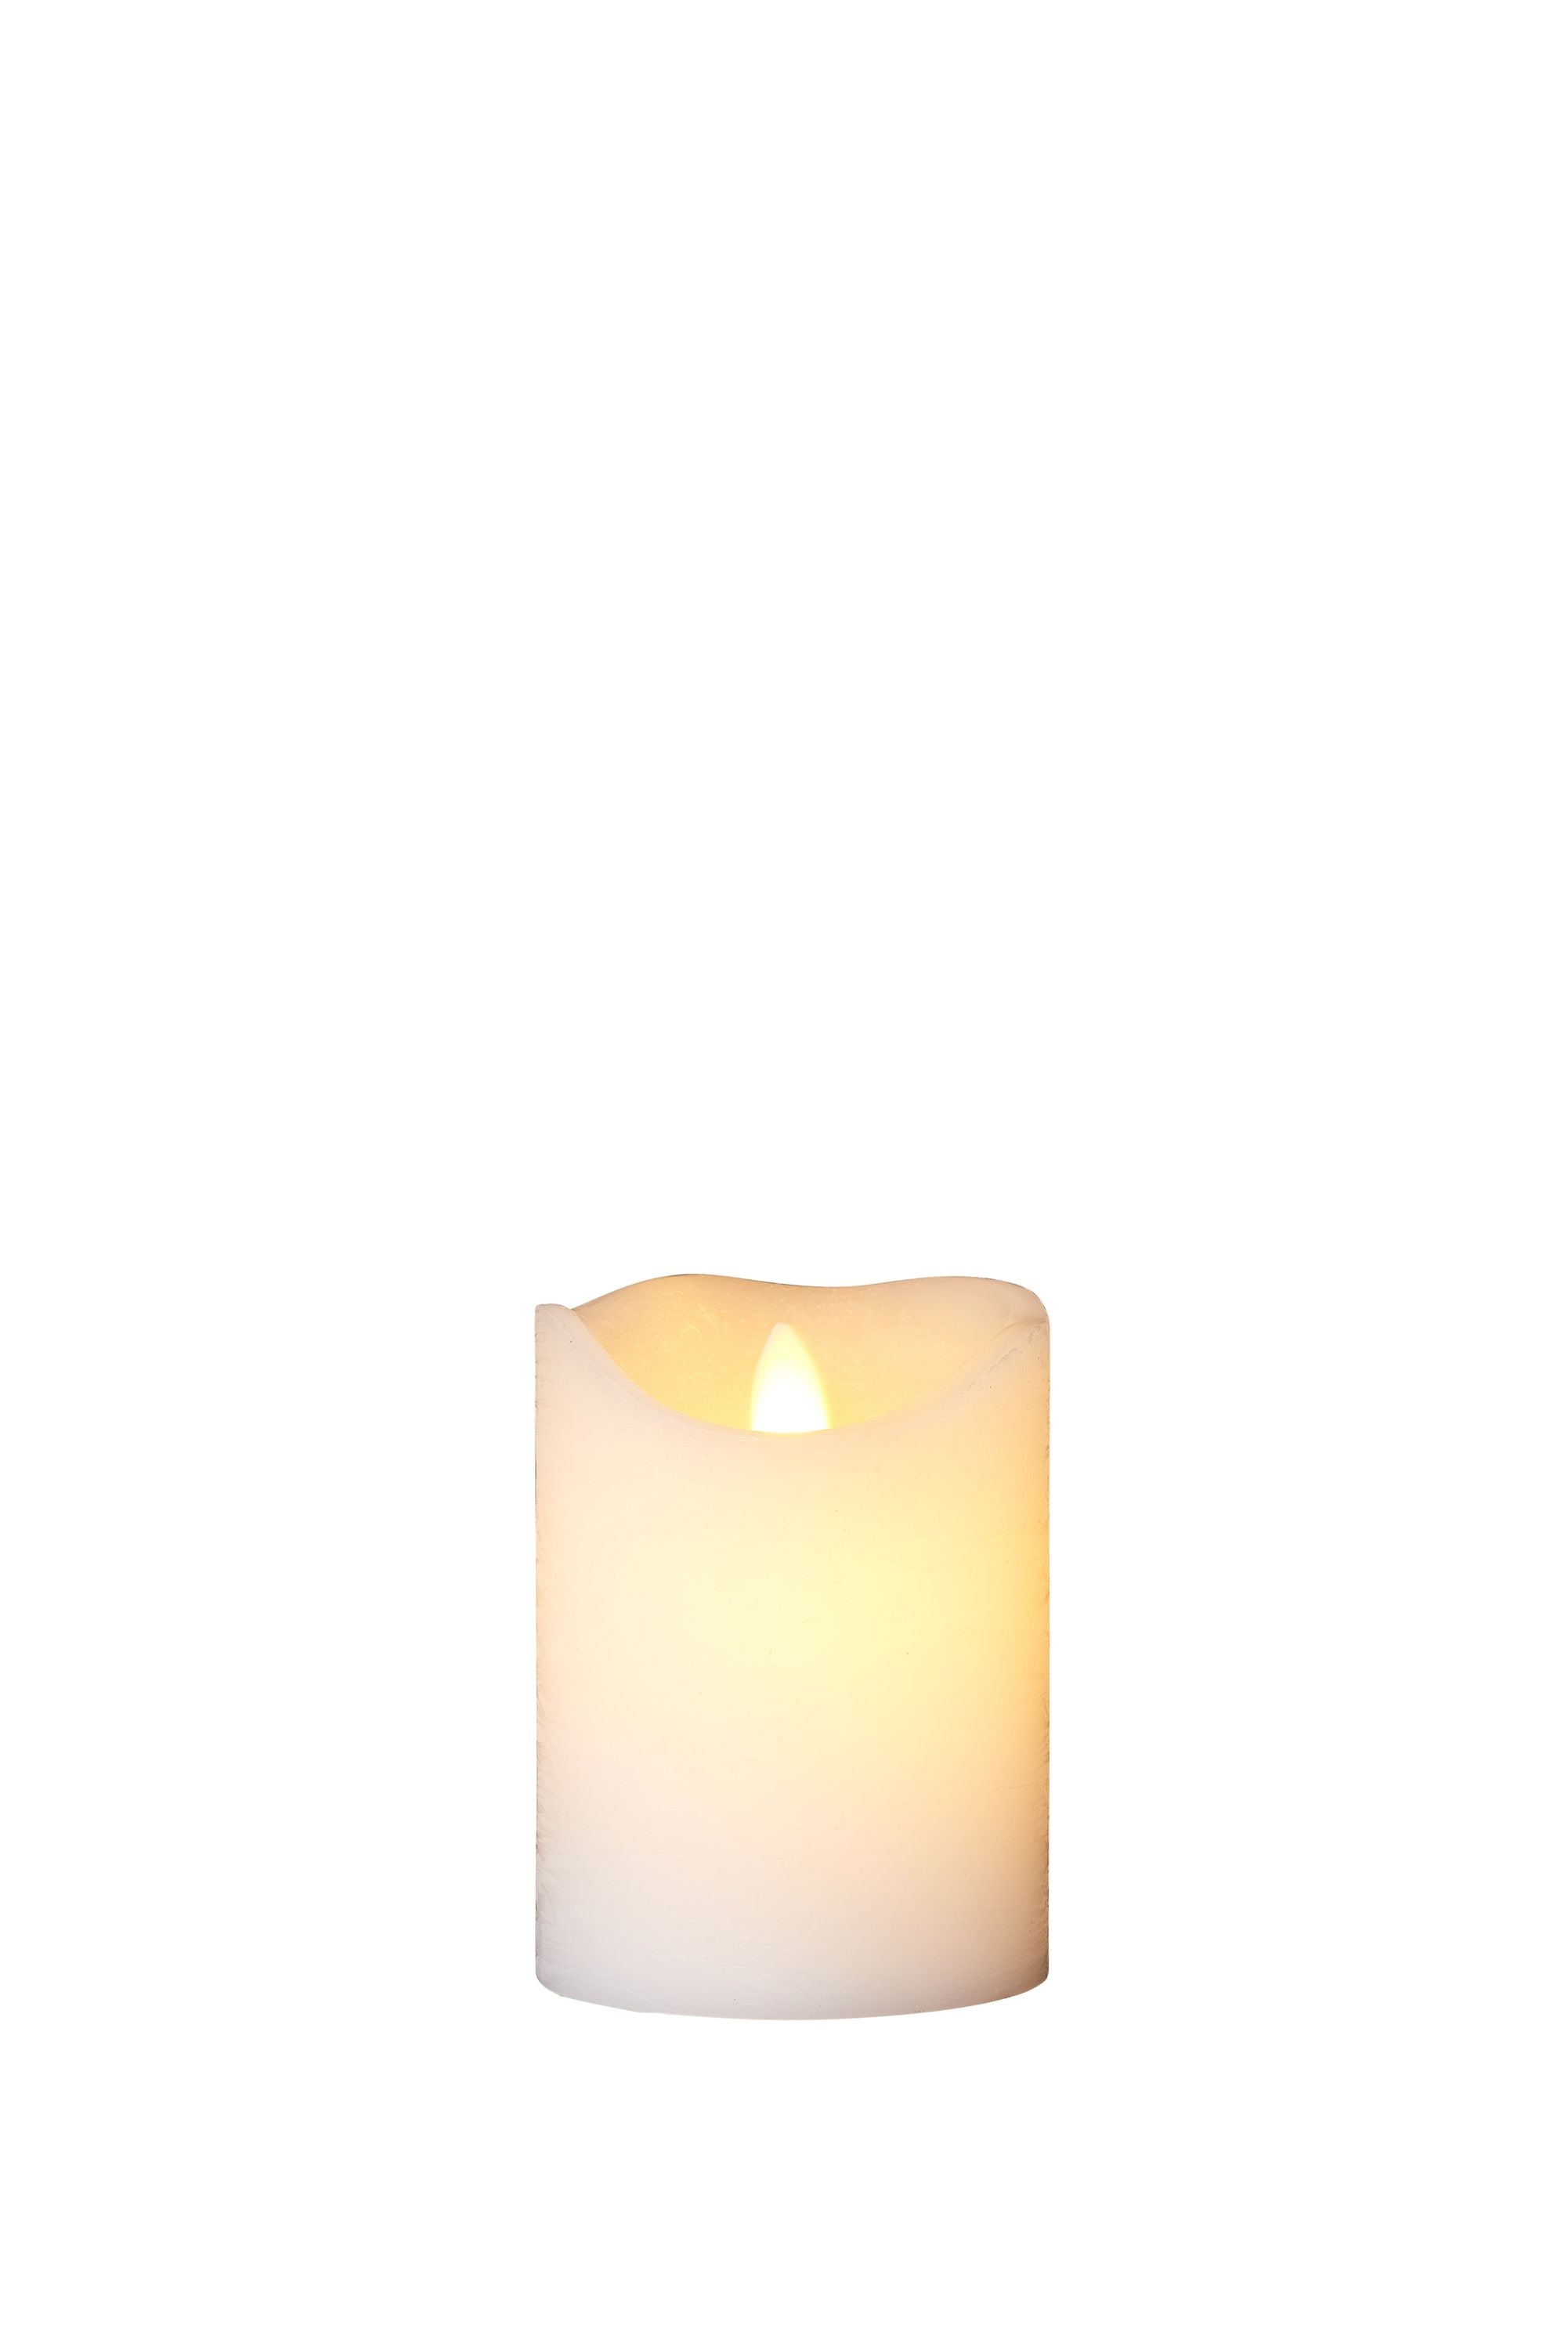 Sirius Sara Exklusive LED -Kerze Ø7,5x H10cm, Weiß